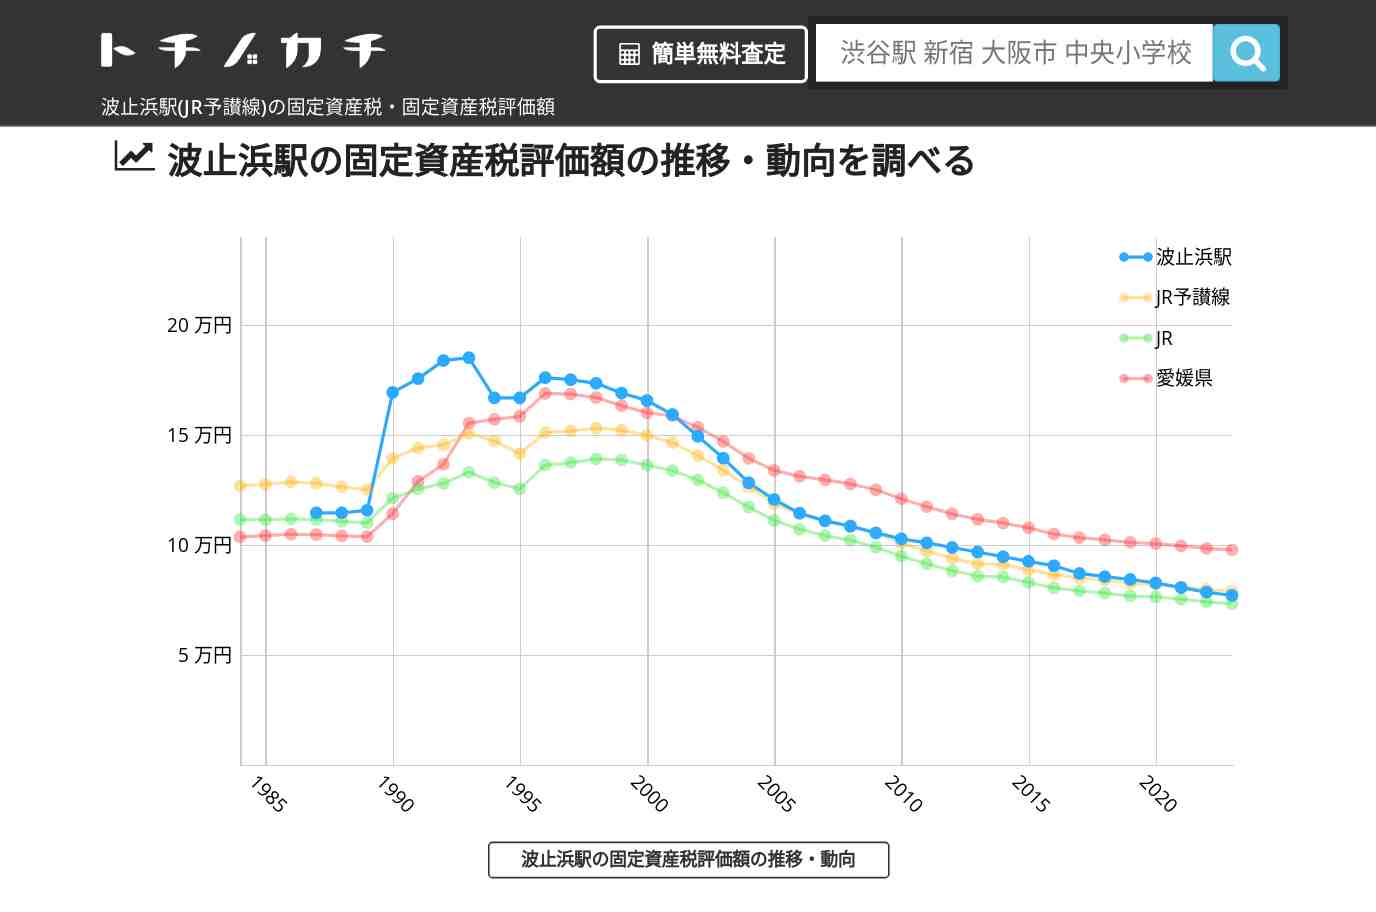 波止浜駅(JR予讃線)の固定資産税・固定資産税評価額 | トチノカチ